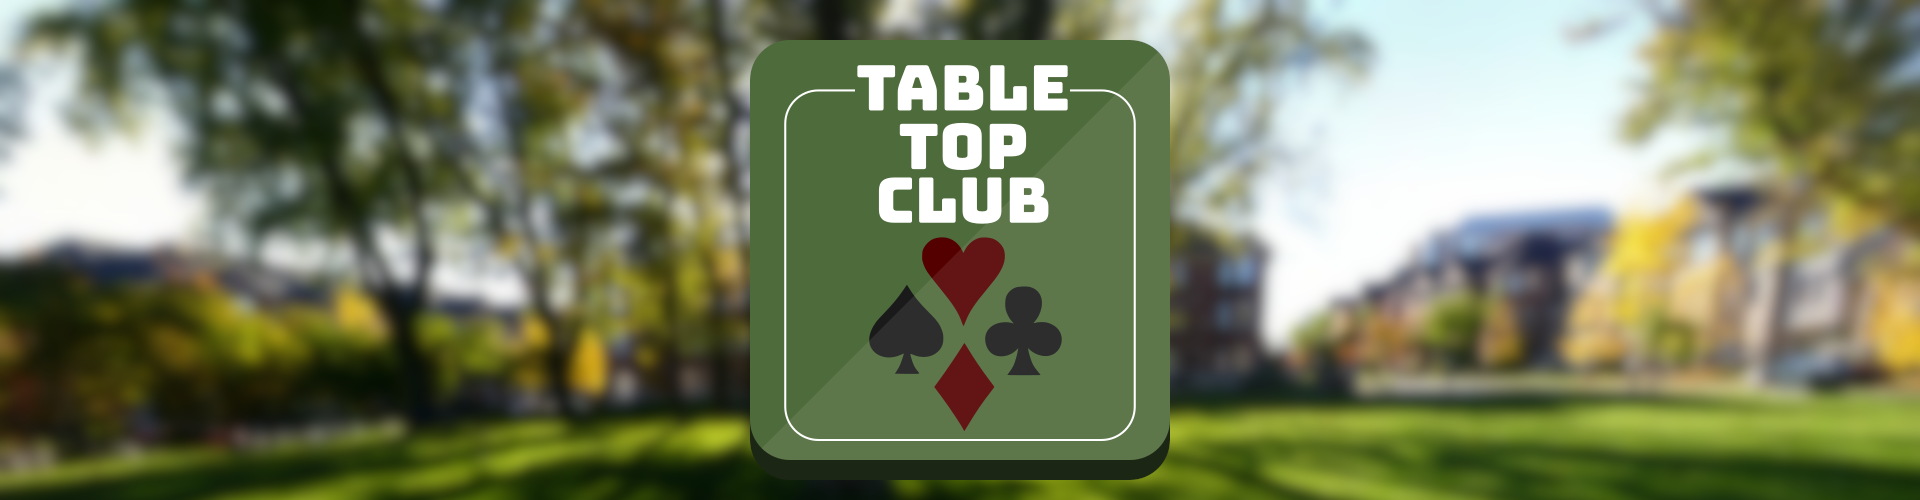 Tabletop Club